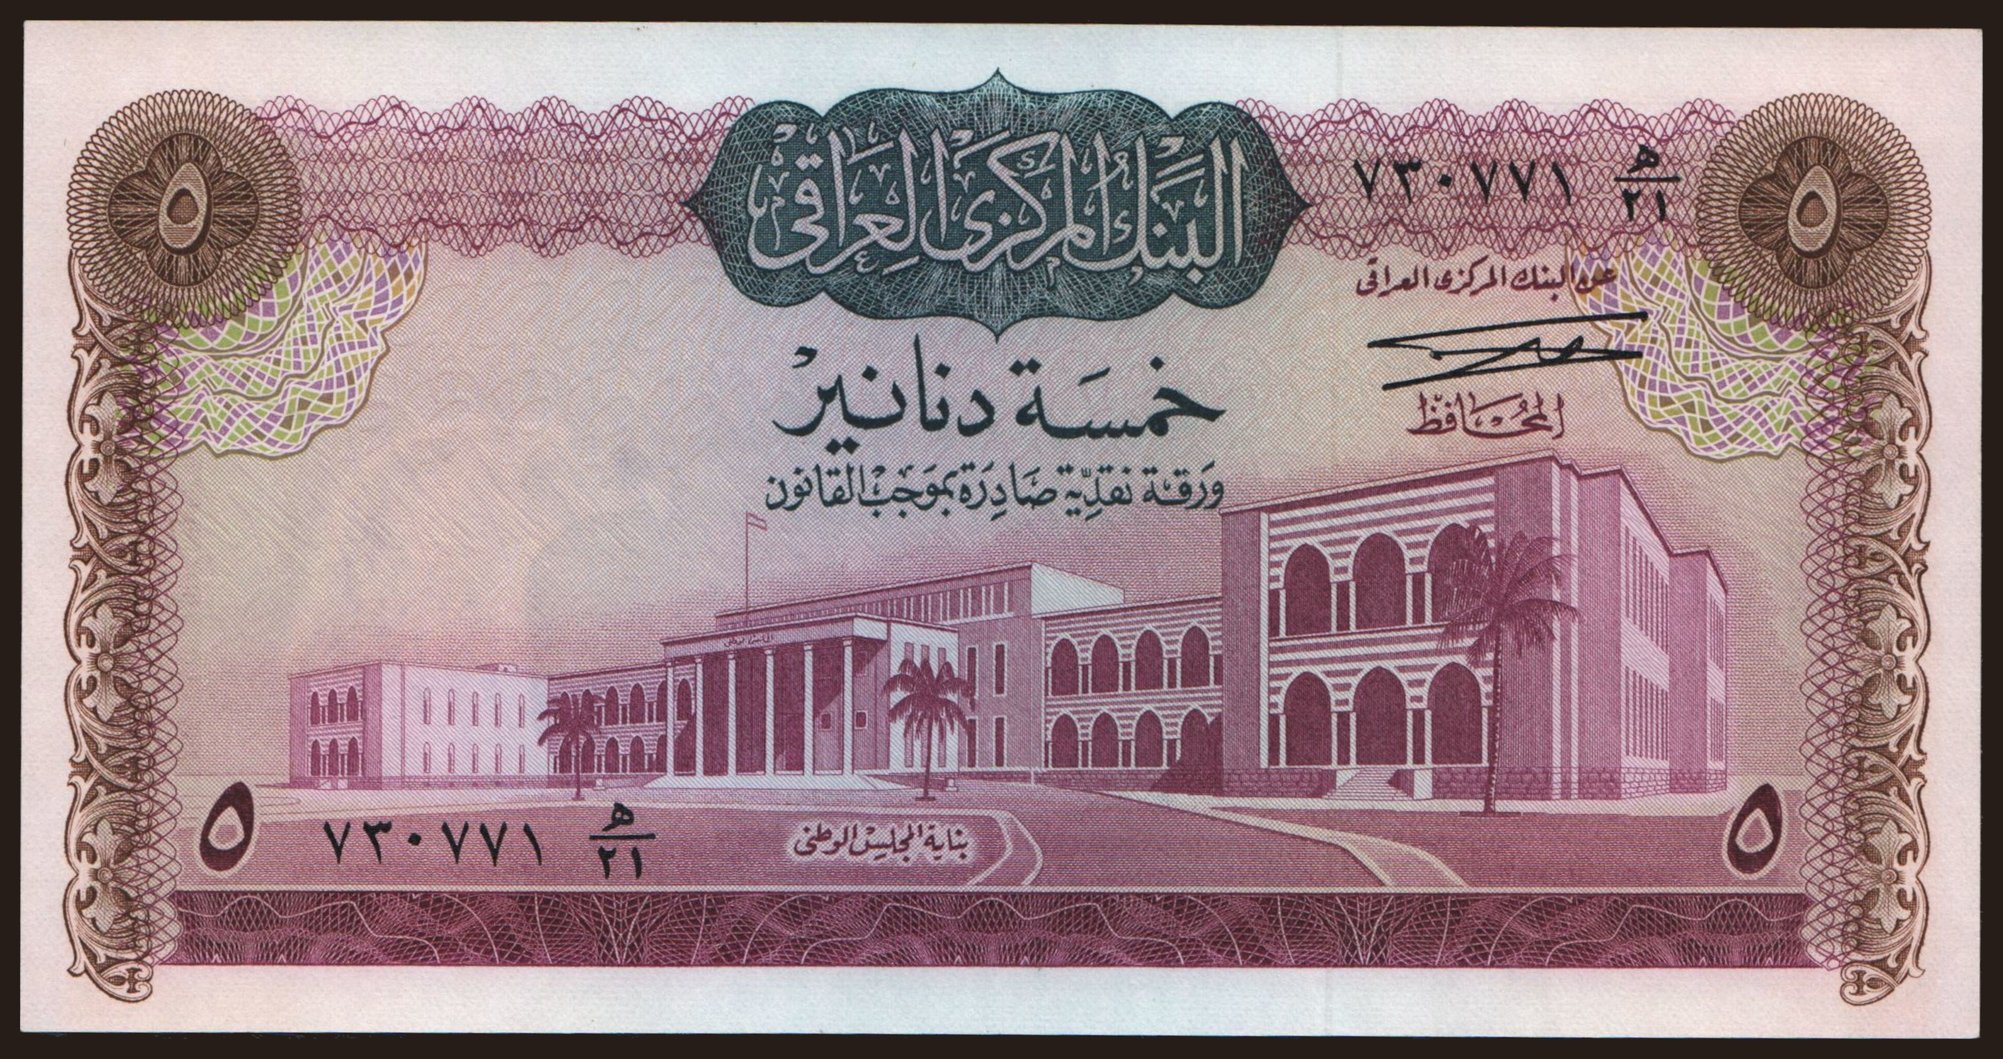 5 dinars, 1971